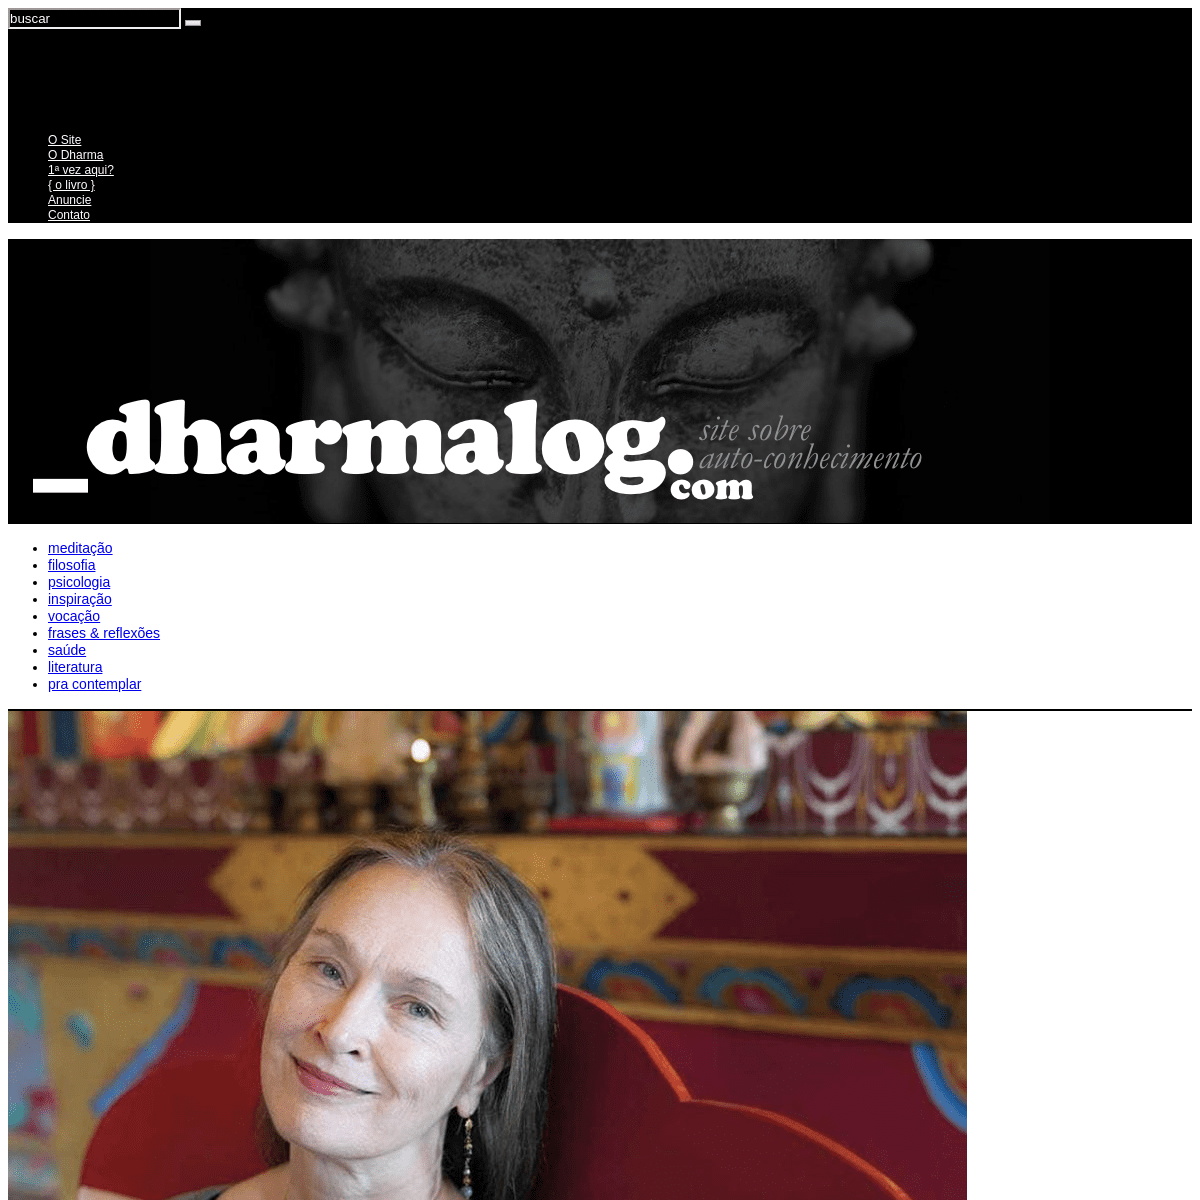 A complete backup of dharmalog.com